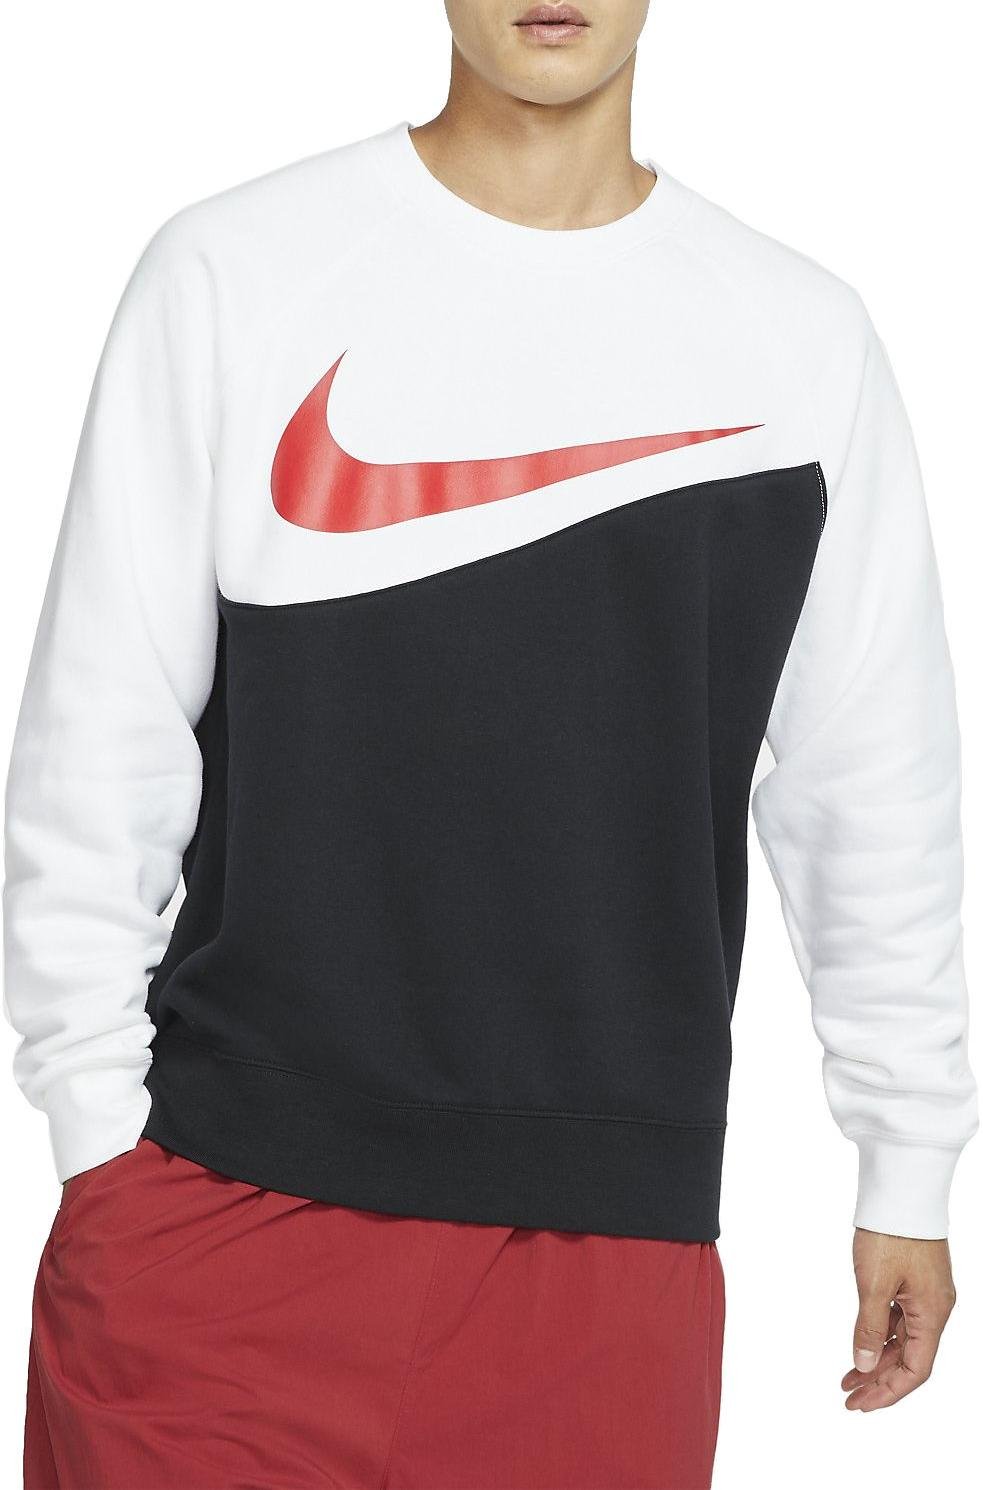 Sweatshirt Nike M NSW SWOOSH Top4Running.com